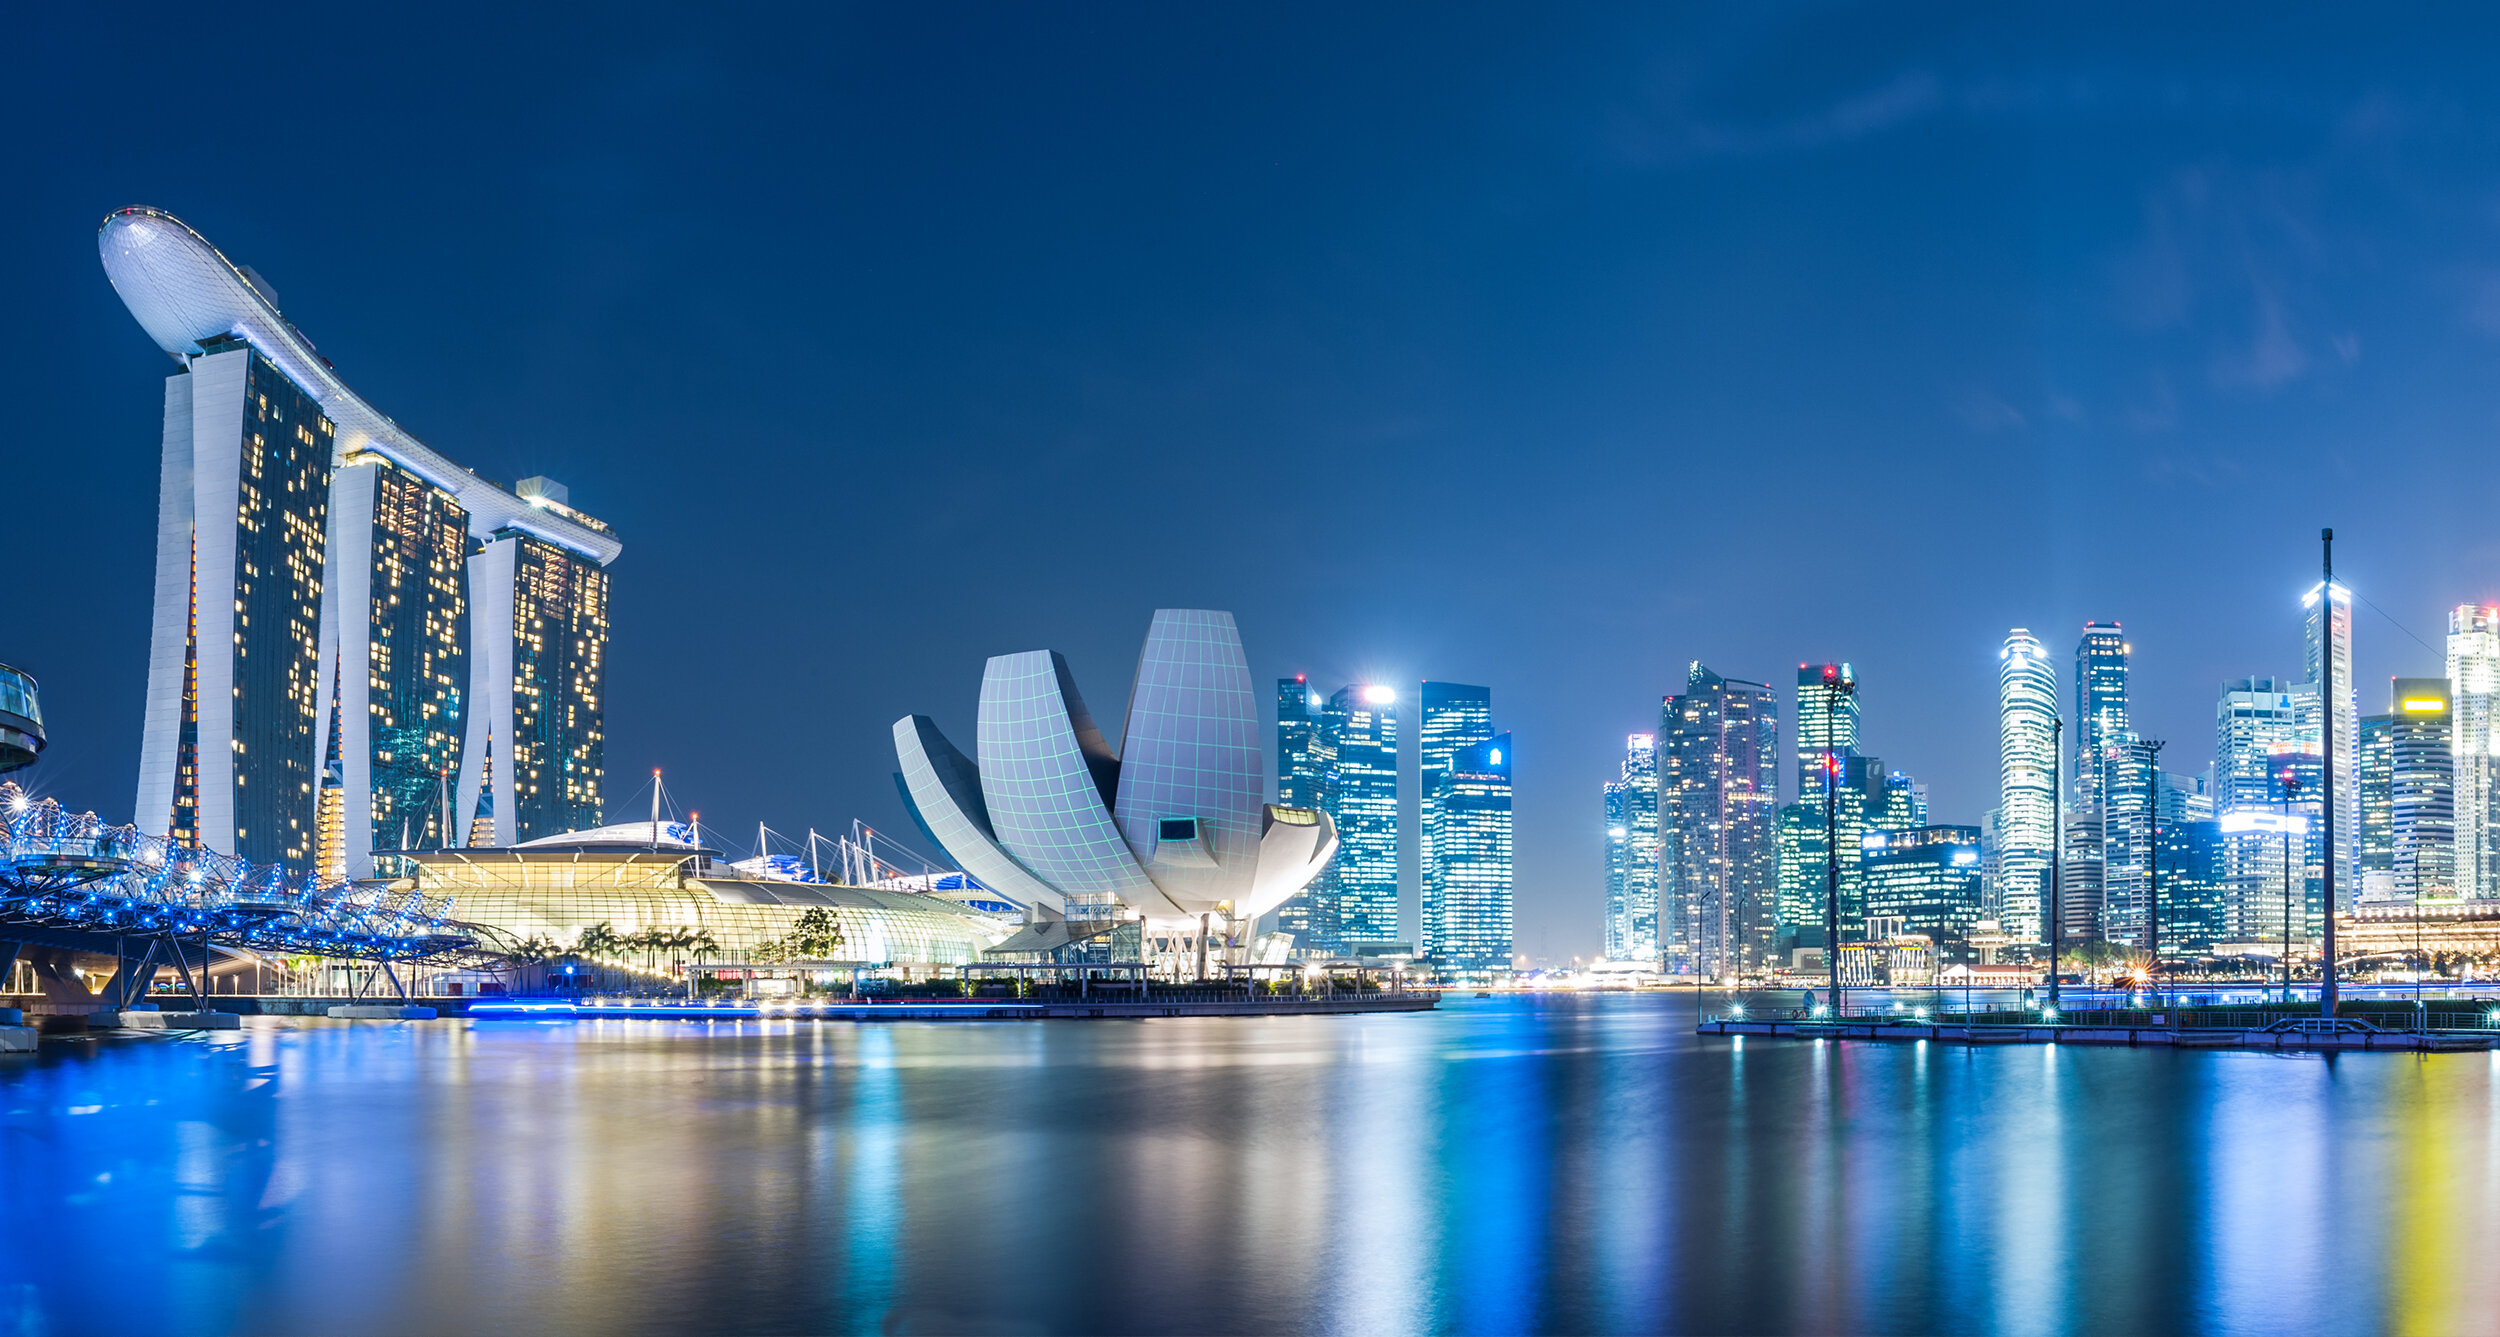 Singapore's Inspirational Leaders - Branding & Innovation